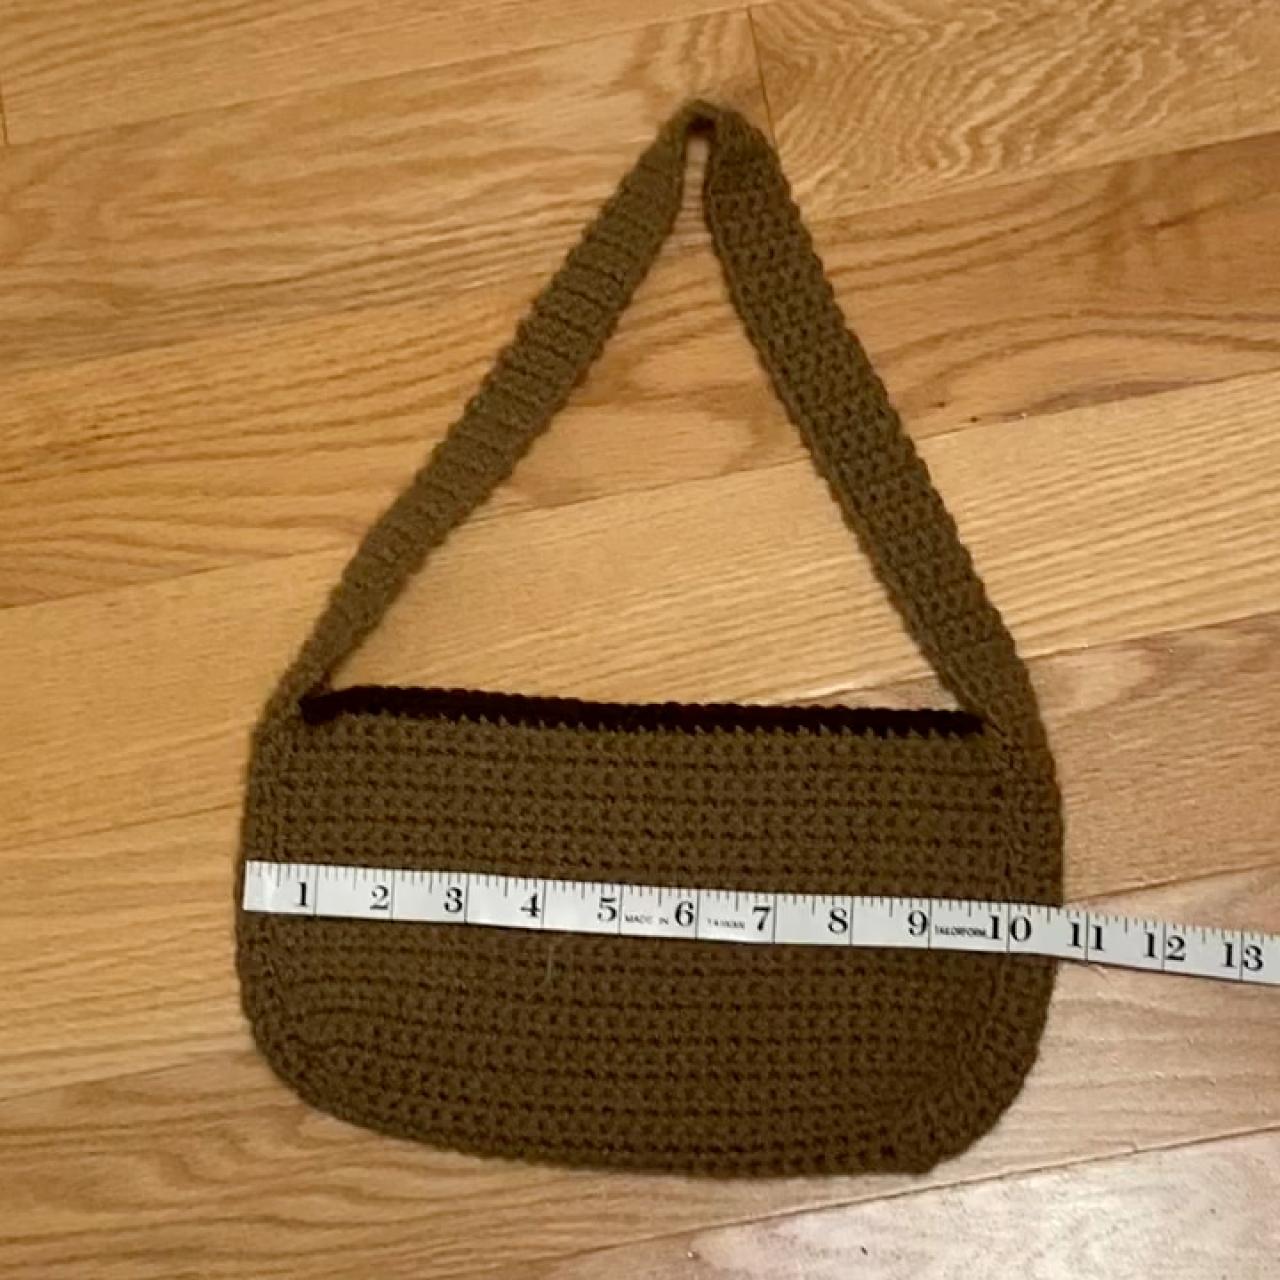 Brown Baguette bag crochet, vintage sequin bag, tote bag, ita bag